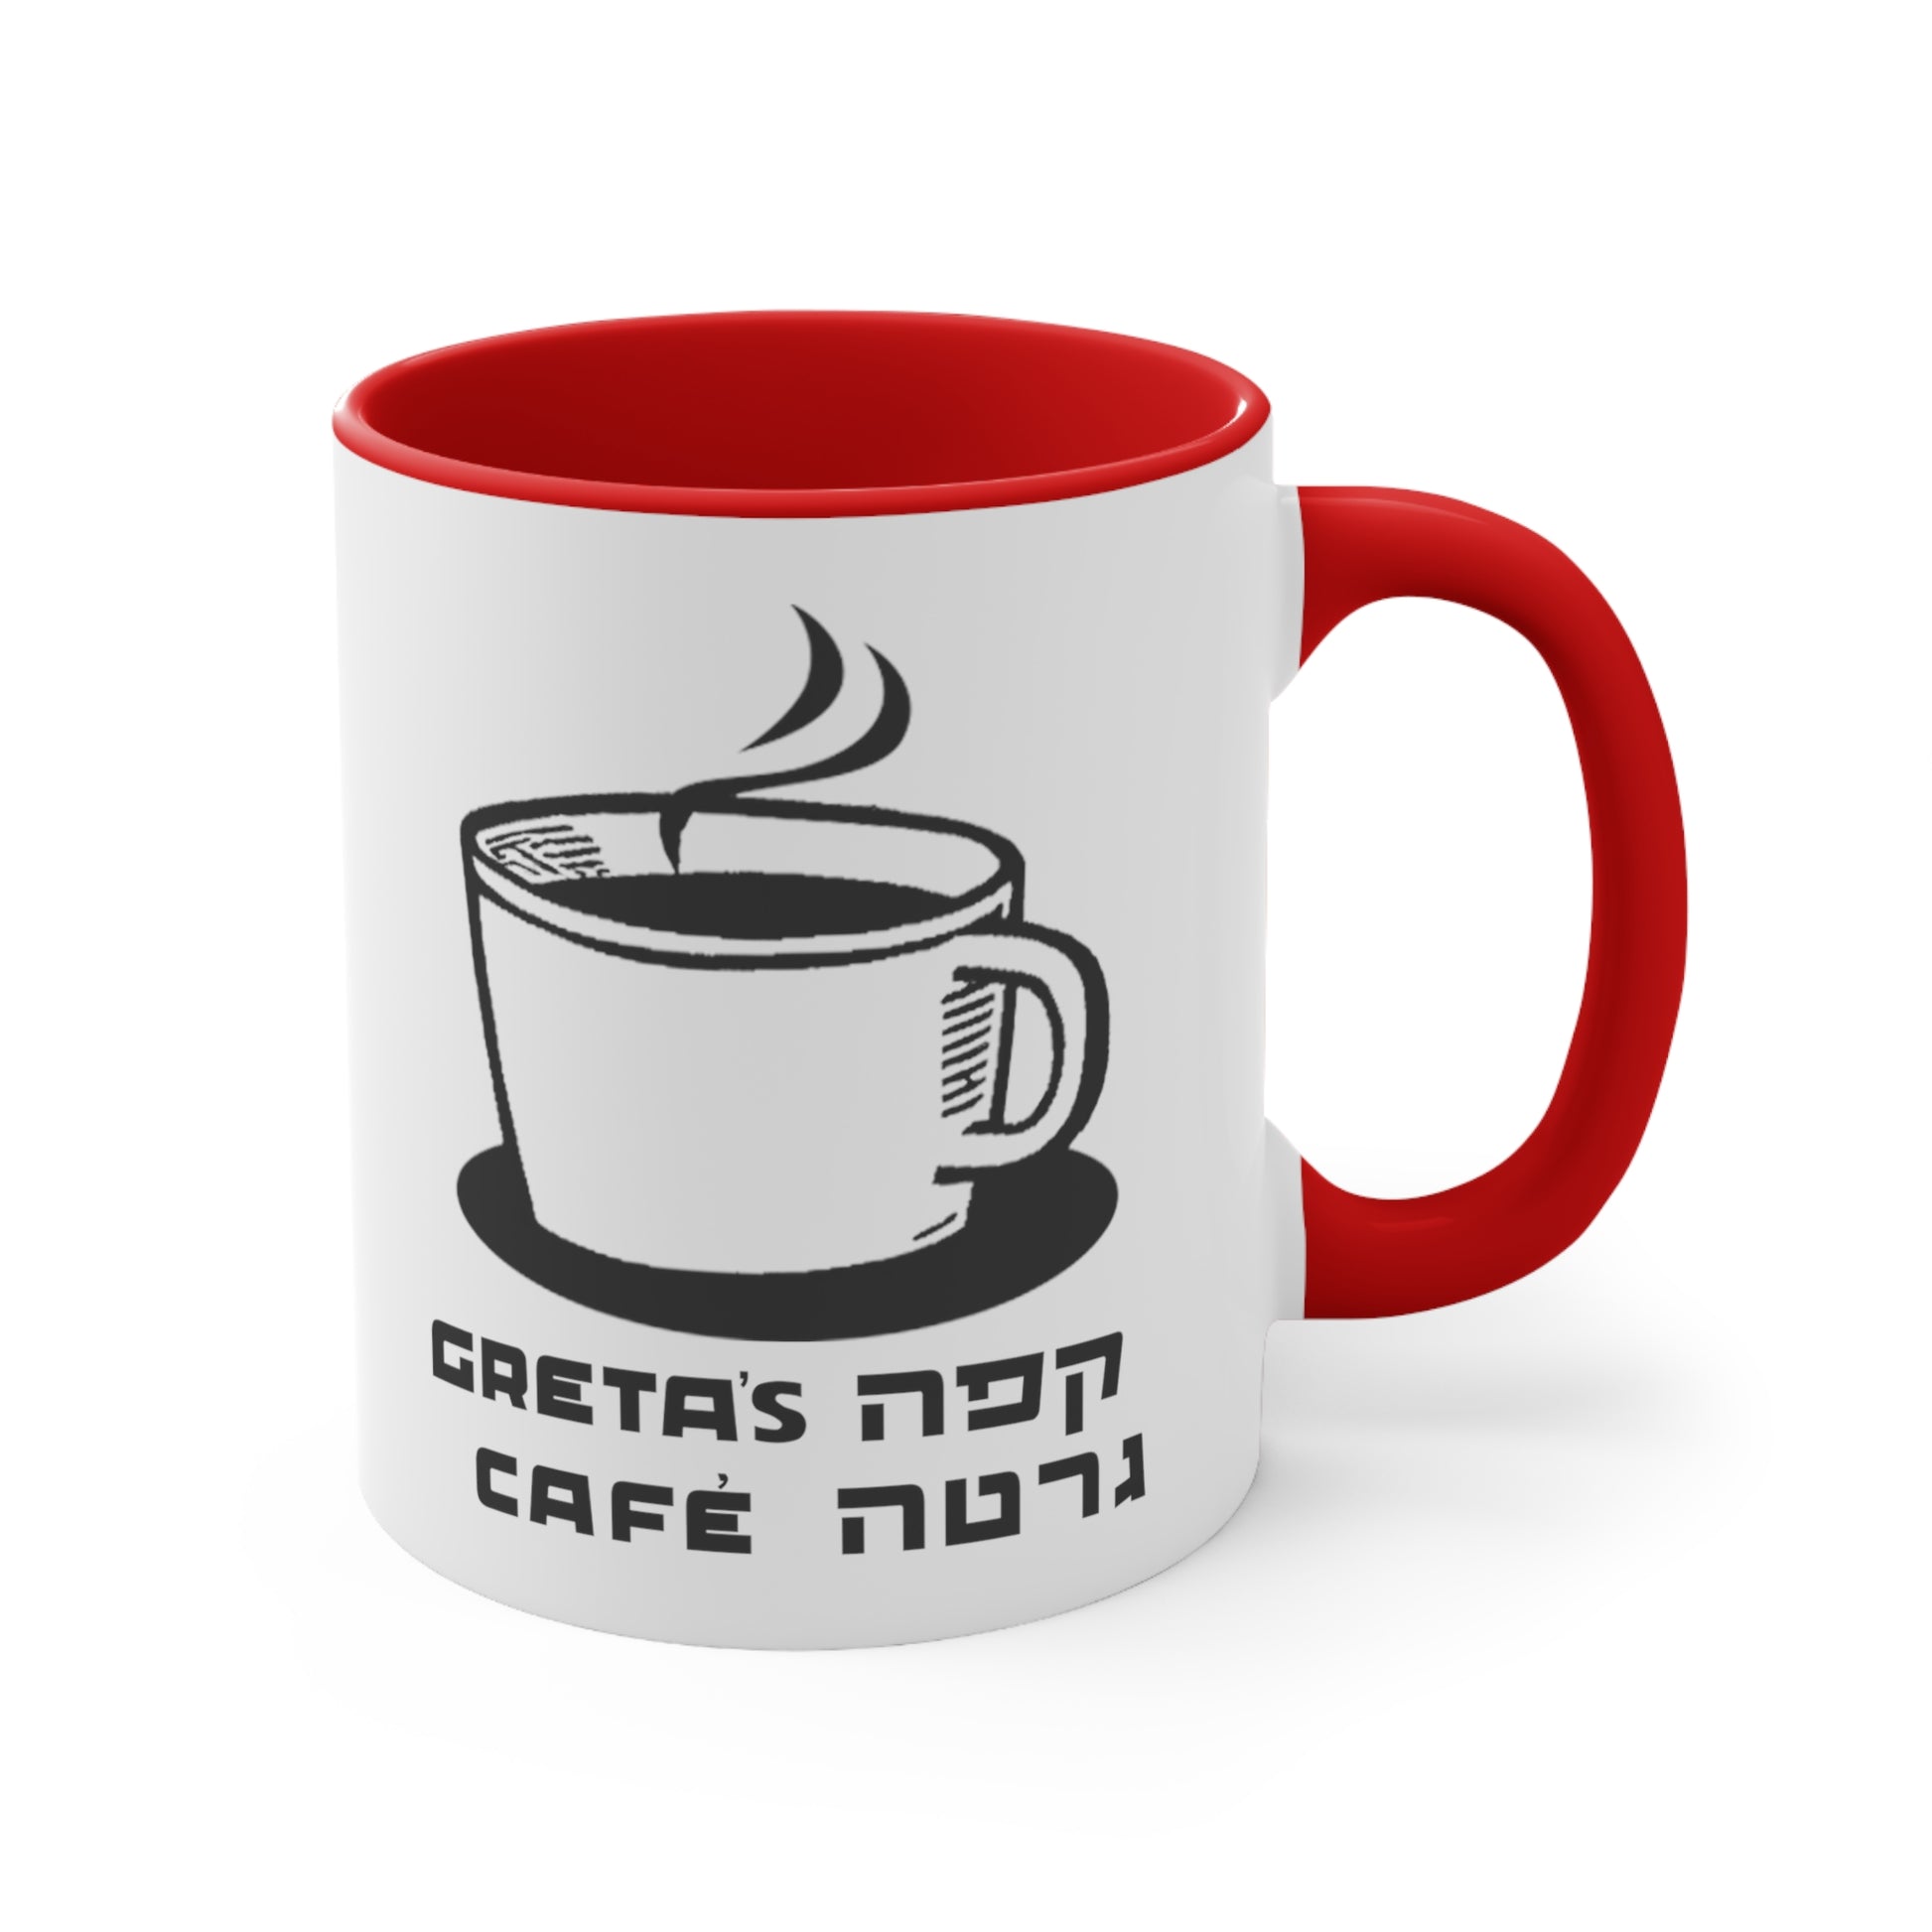 Greta's Cafe Accented Mug - red